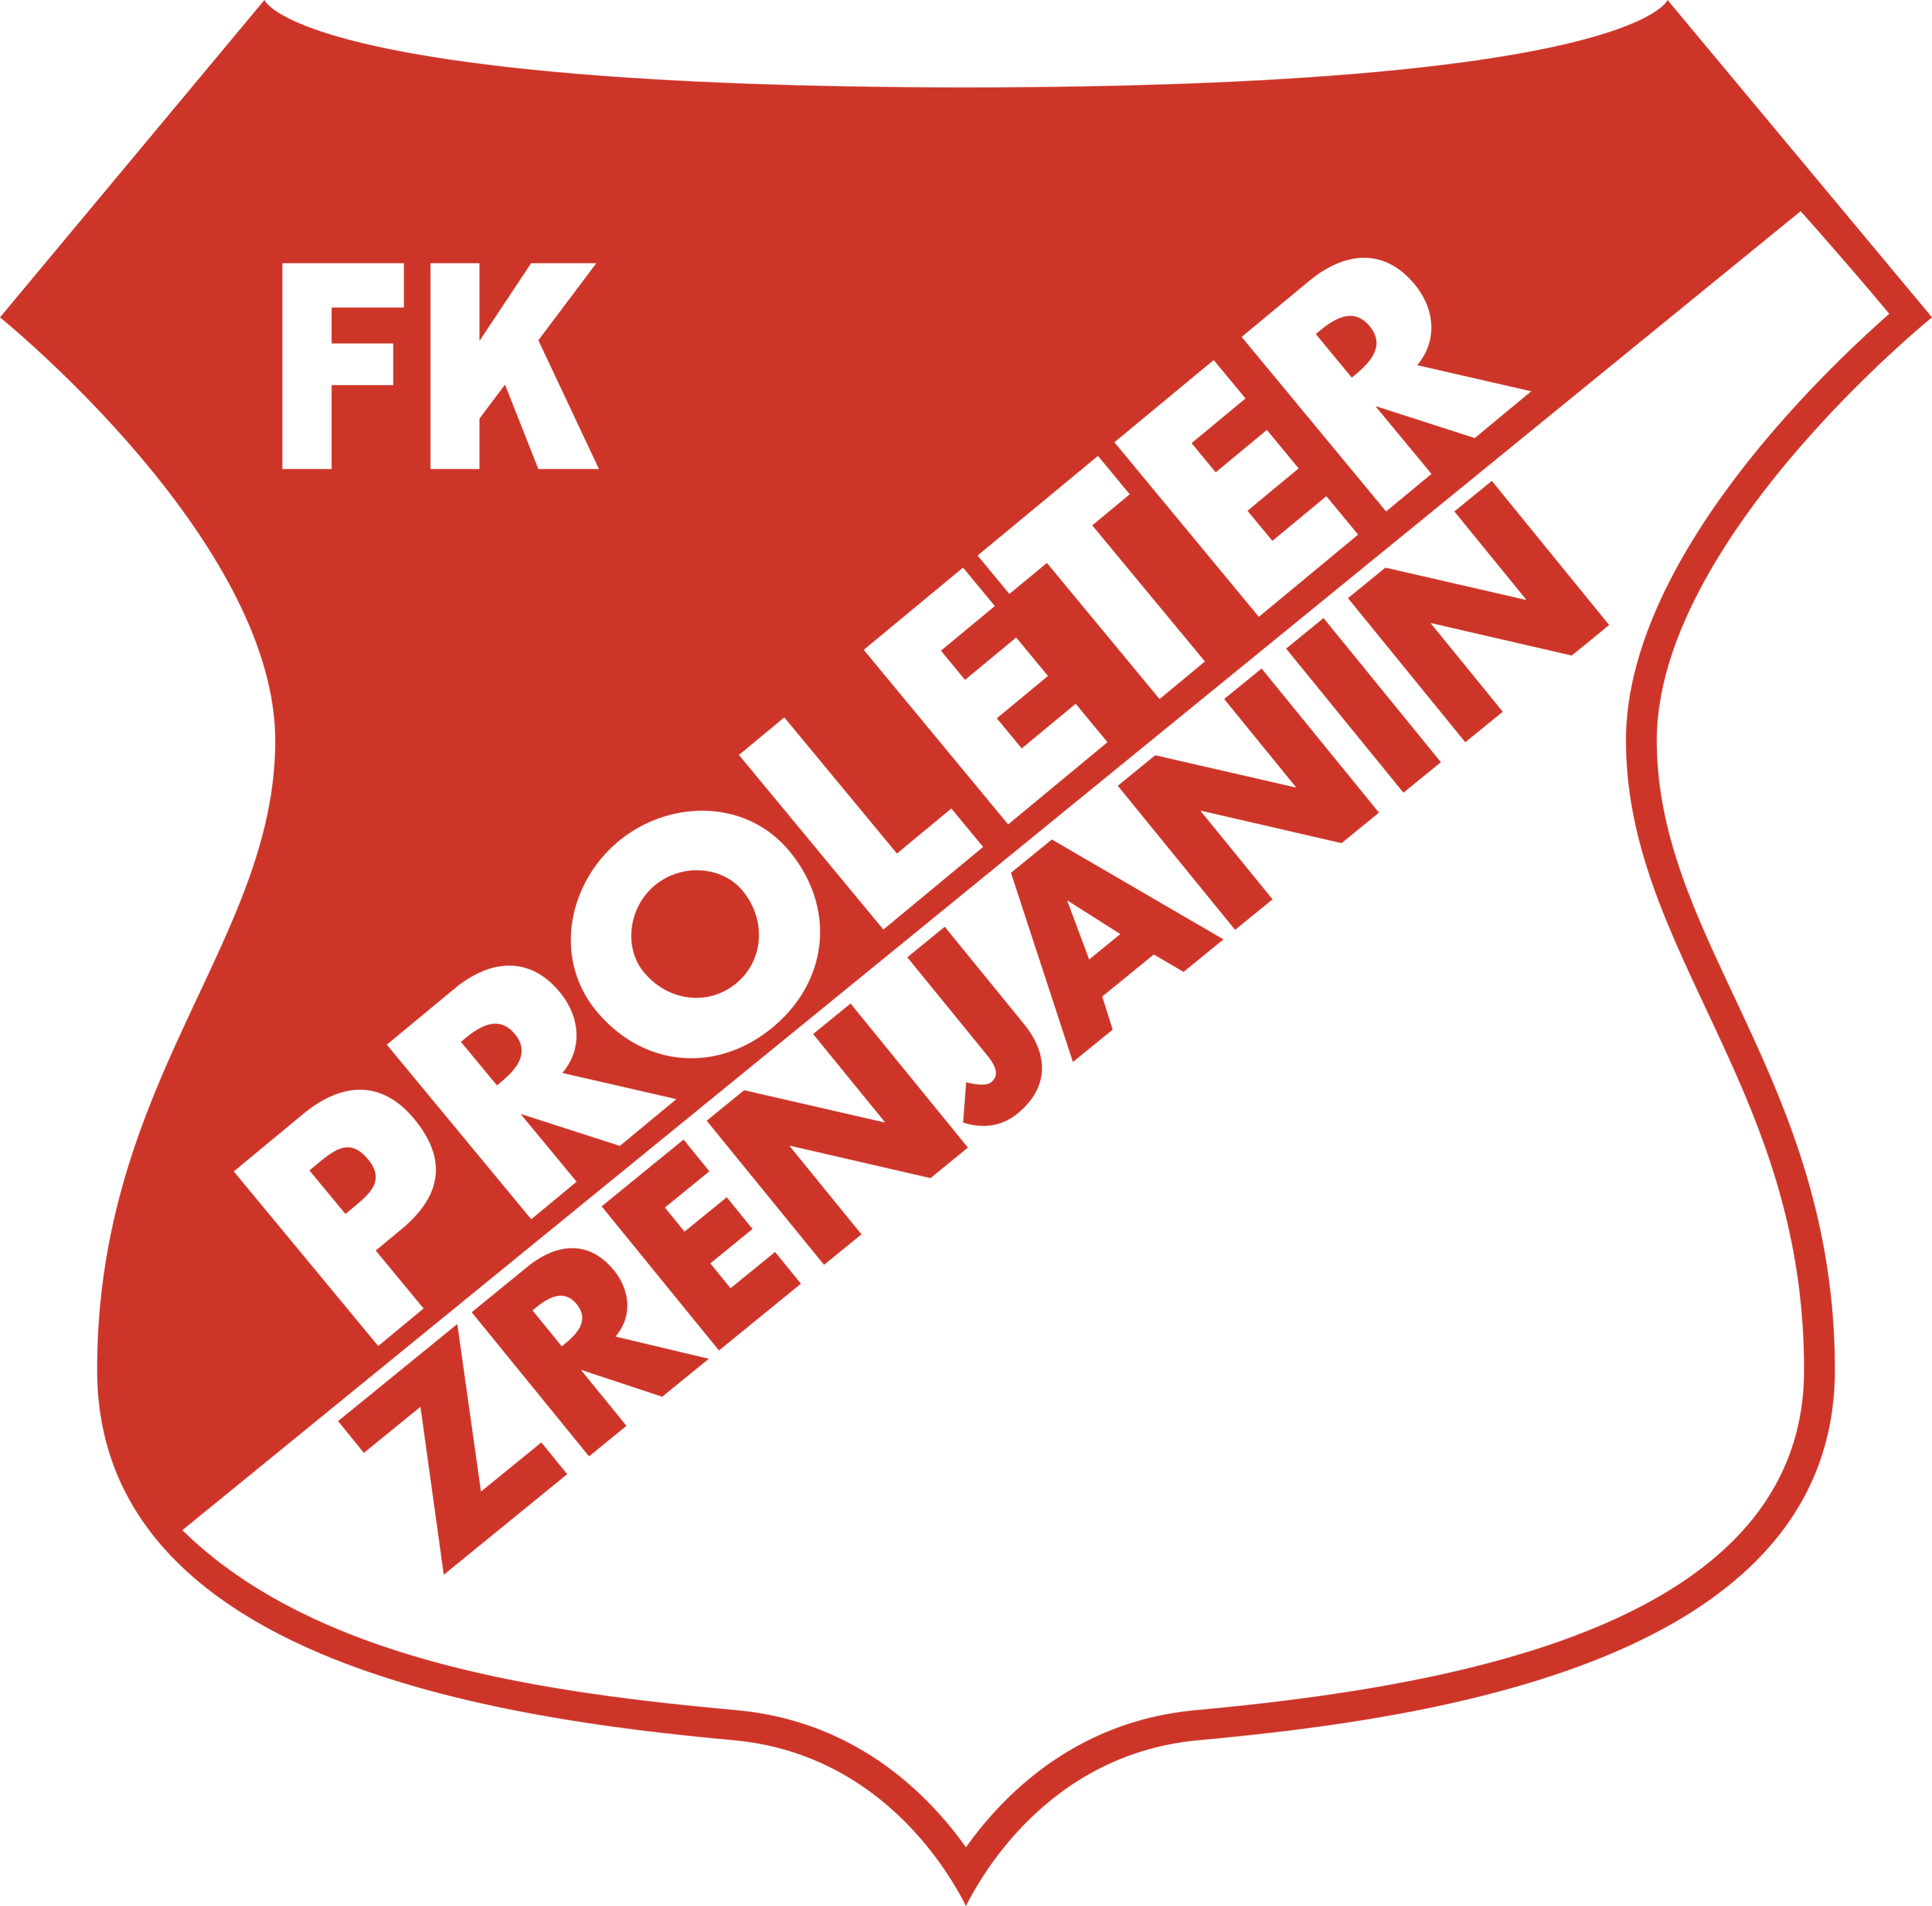 Proleter Zjenanin Logo